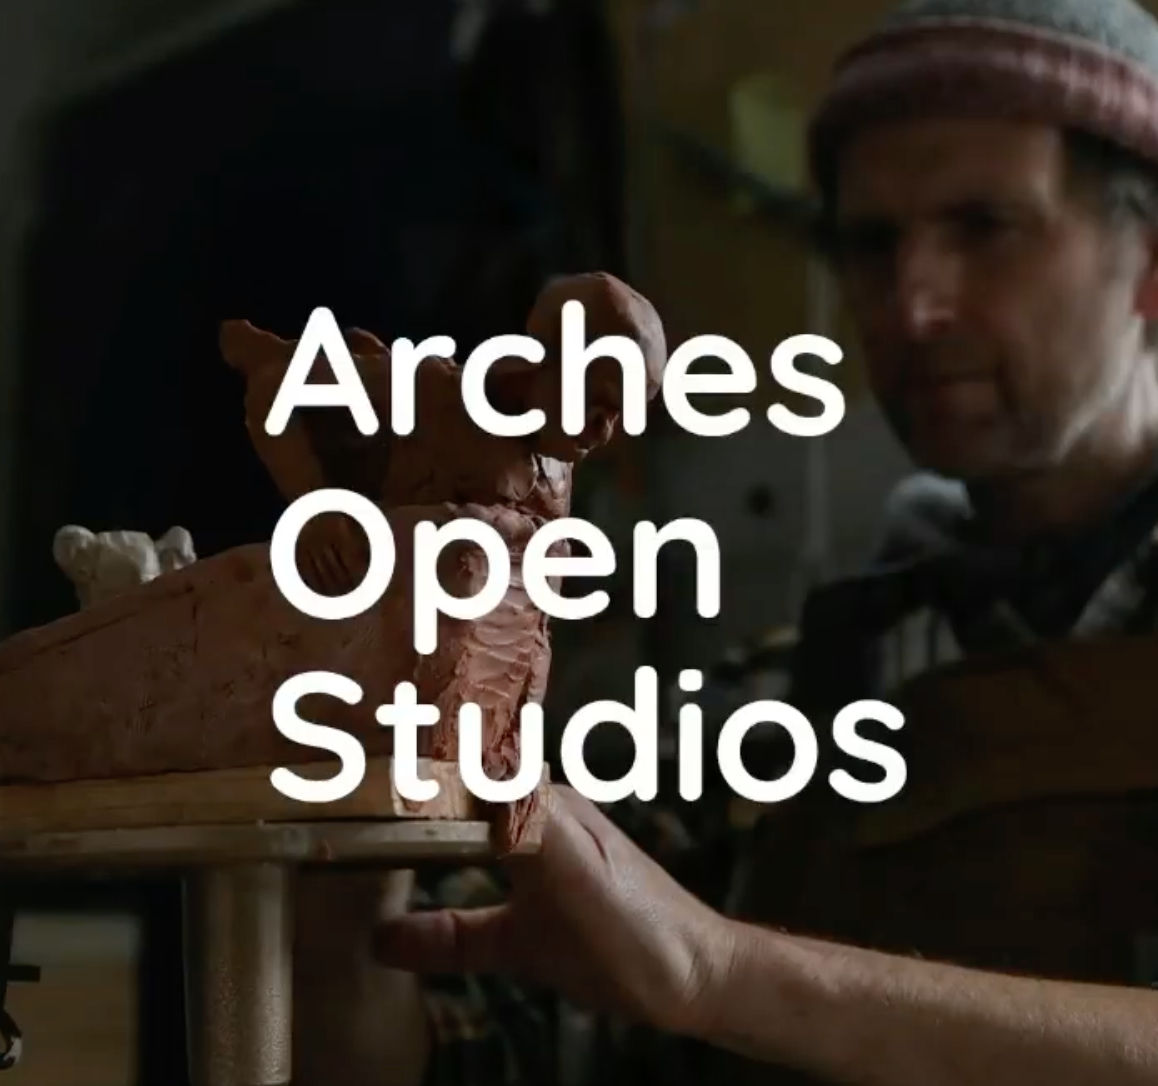 Arches open Studios